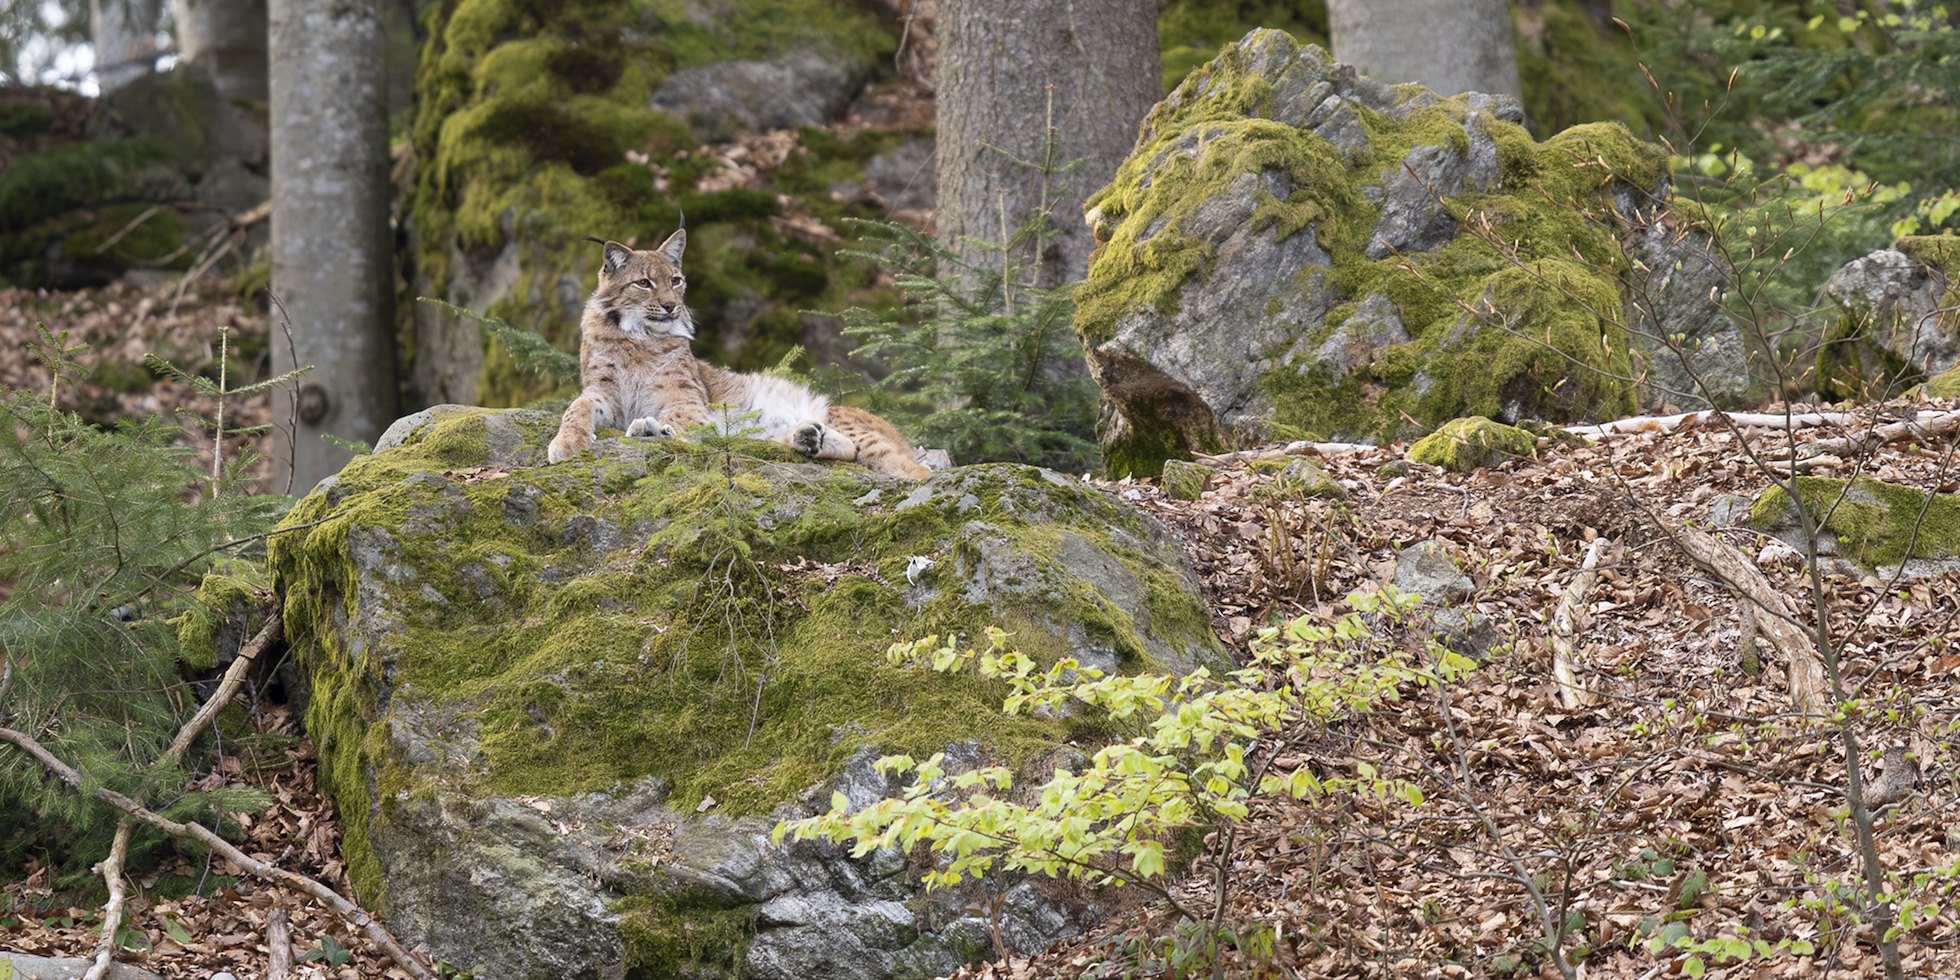 Eurasian lynx, Lynx lynx, adult in beech forest in Bayerisher Wald National Park, Germany (Image taken in captivity)